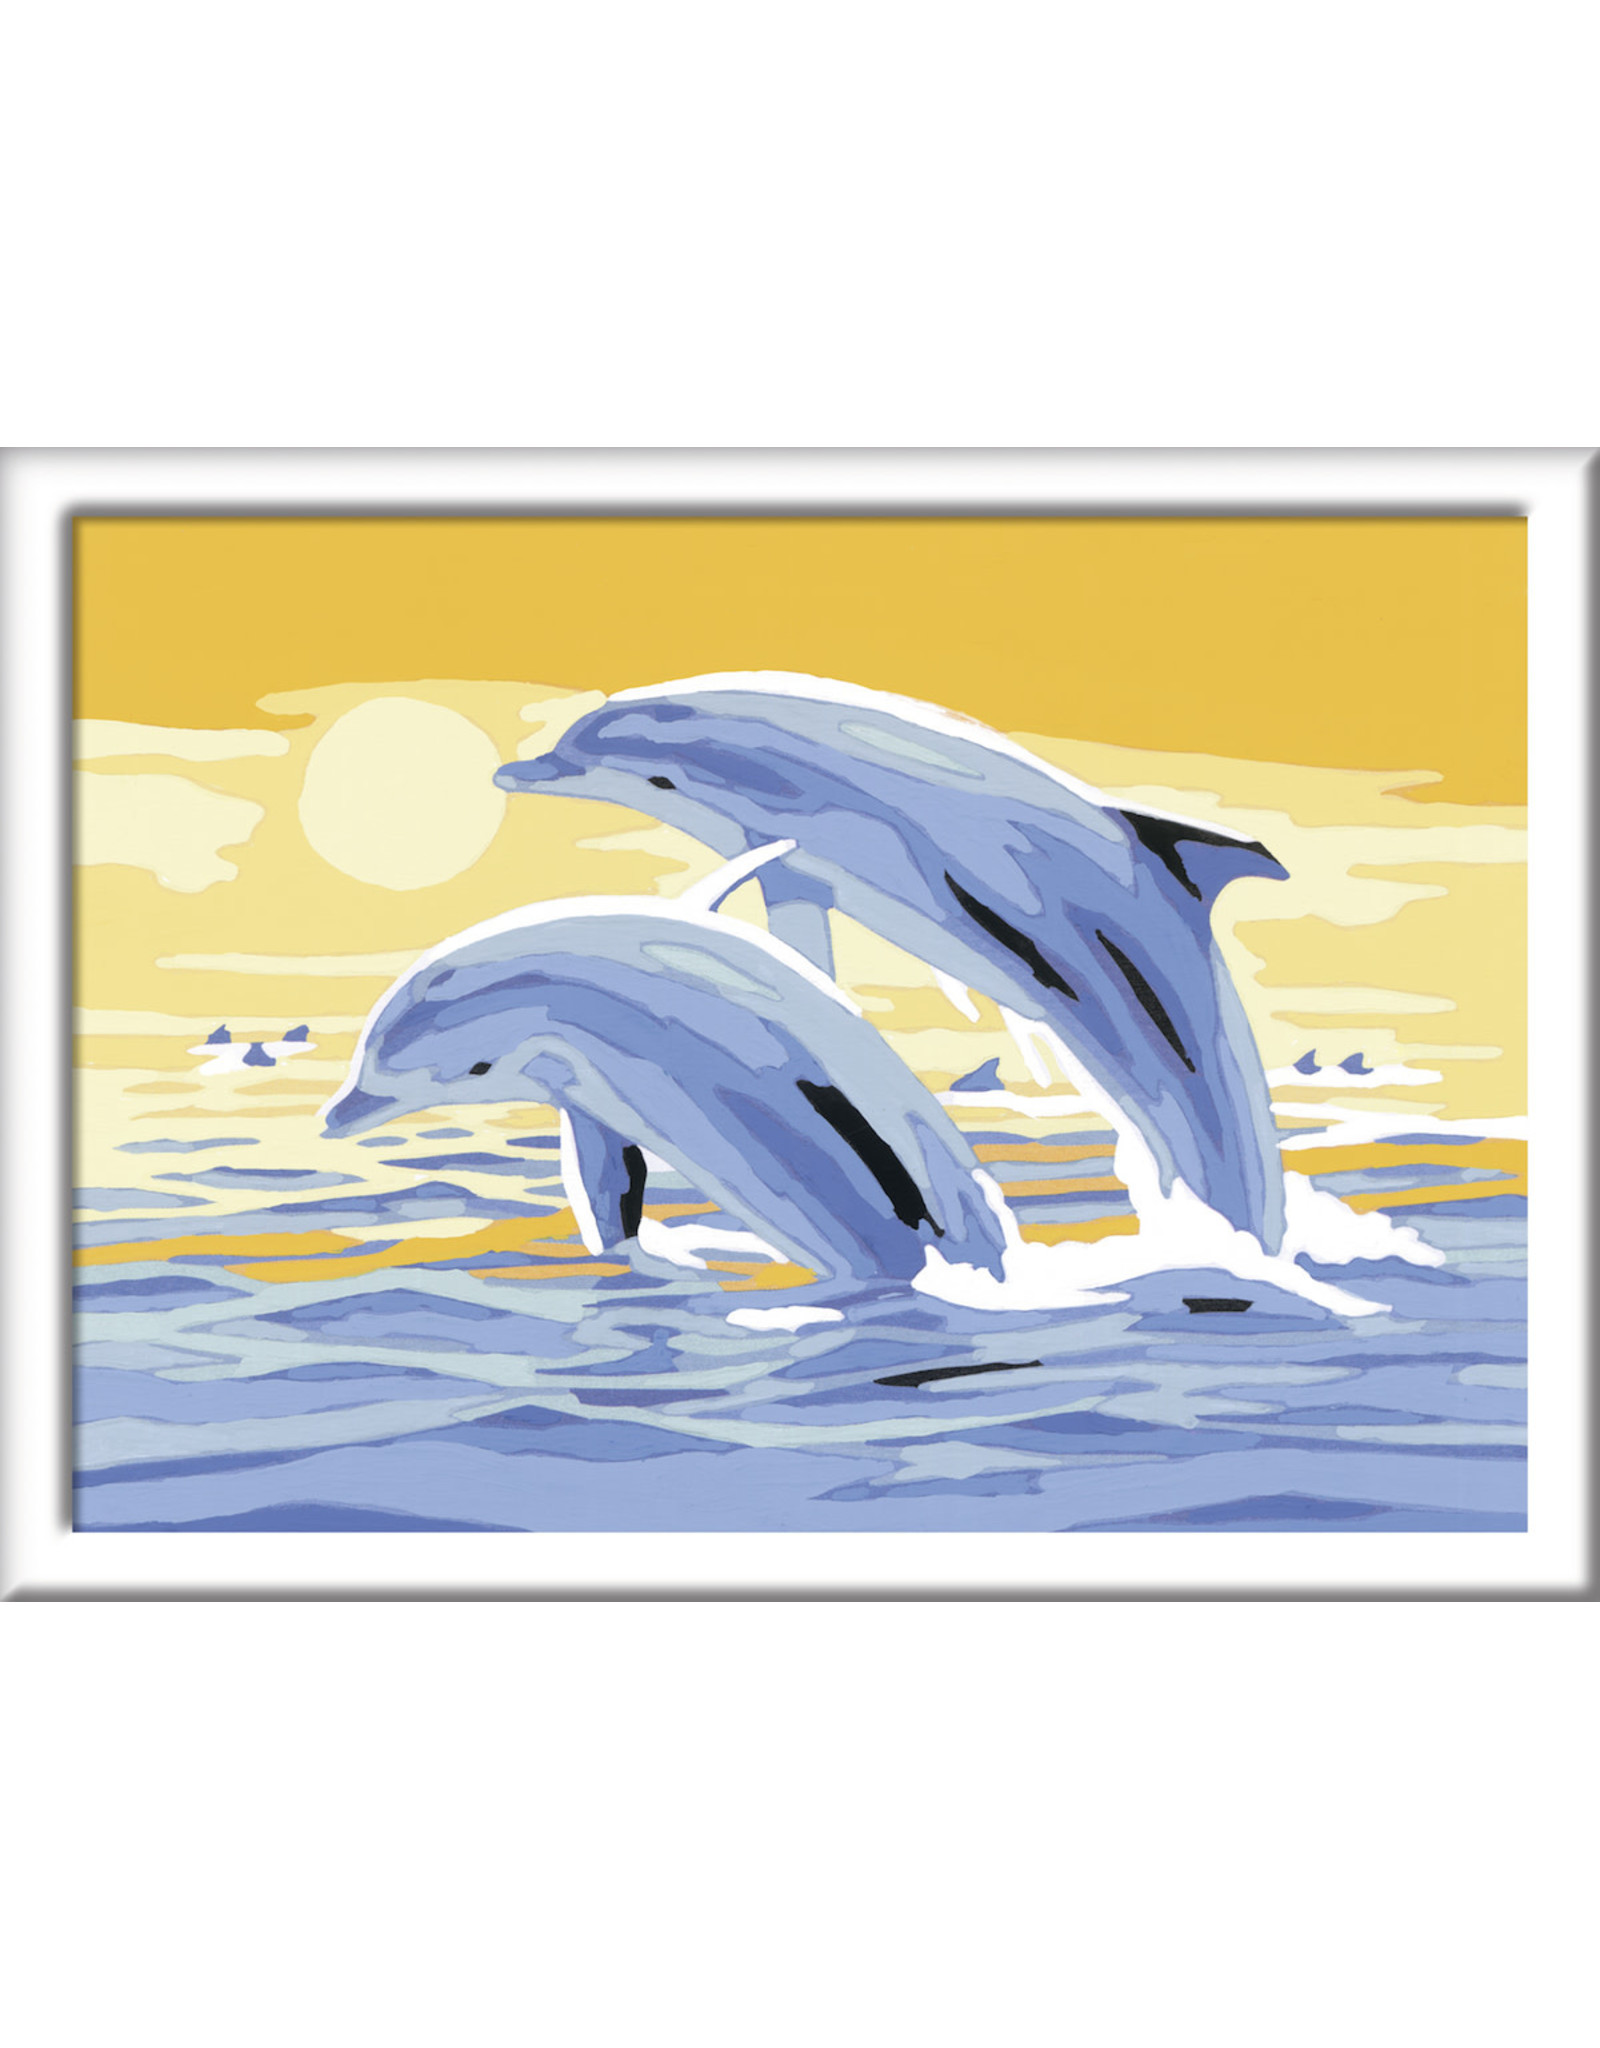 Ravensburger Schilderen op nummer 280537 Springende Dolfijnen